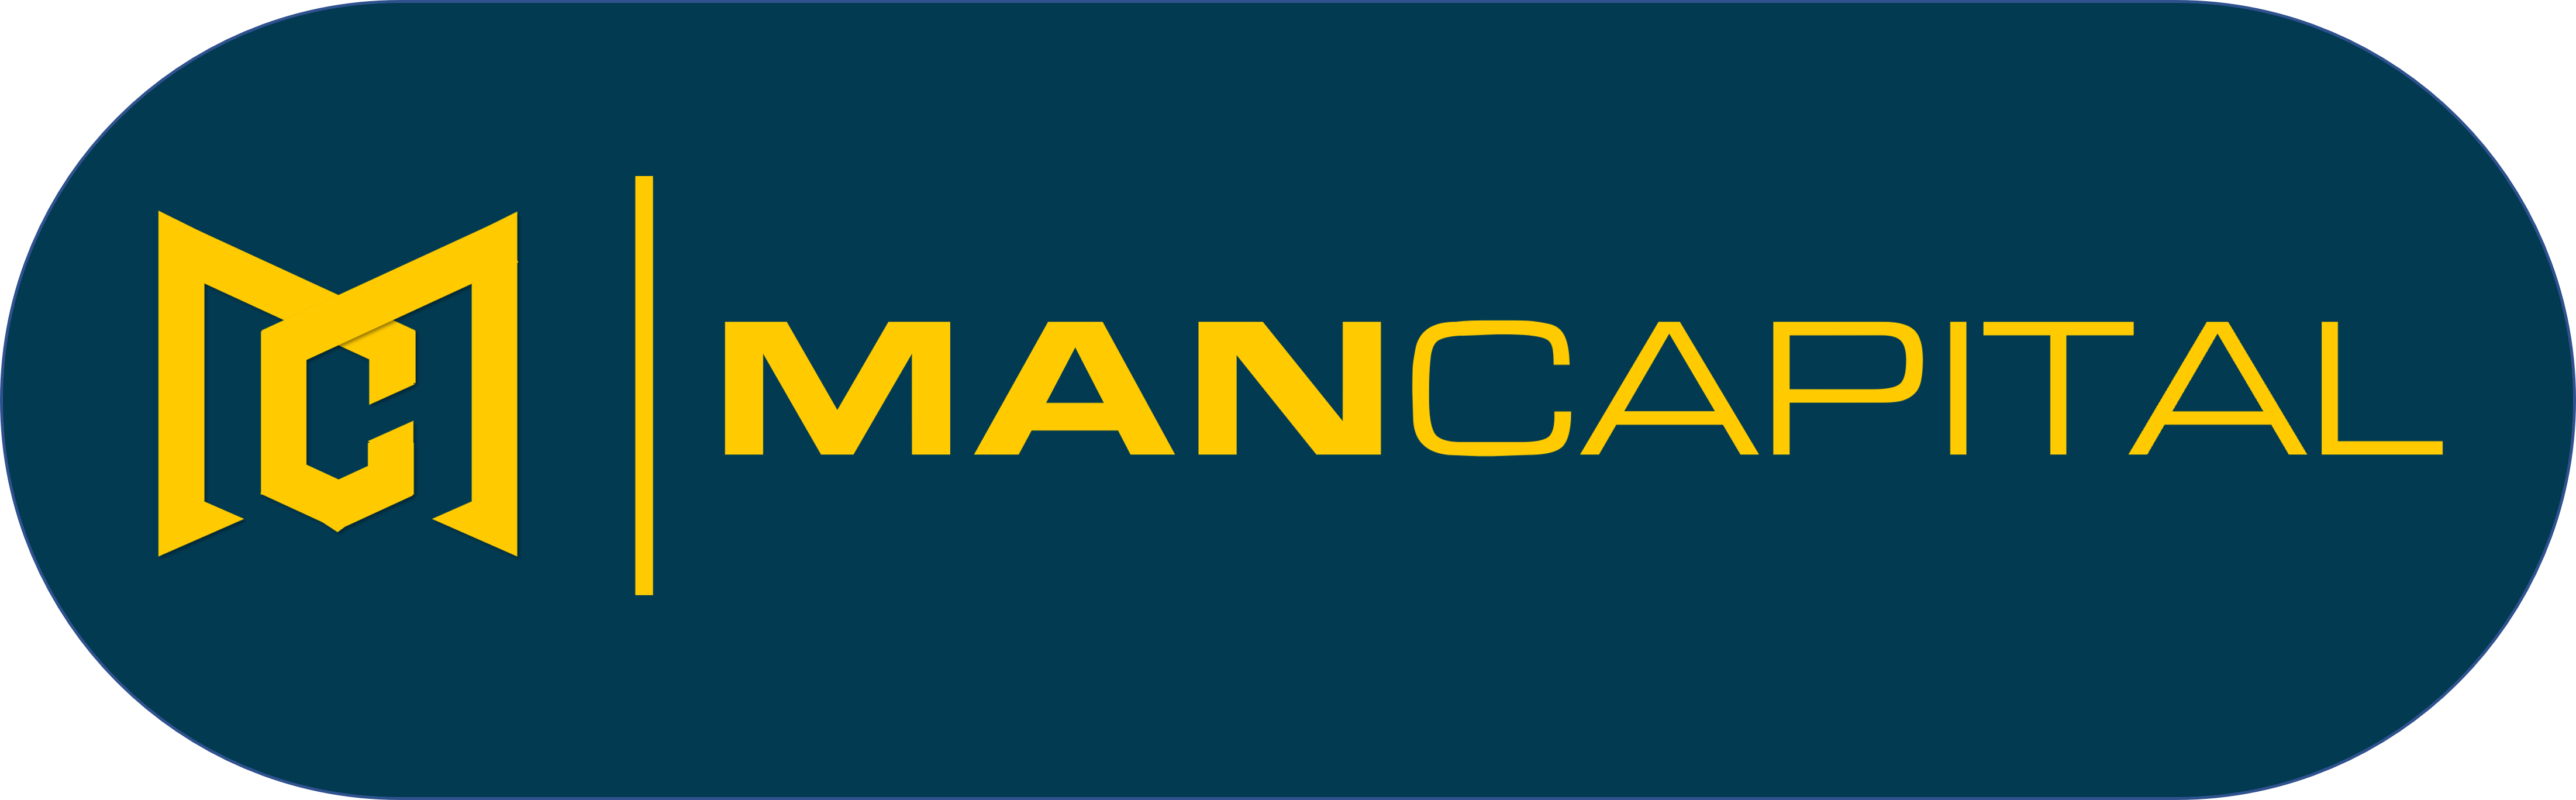 Man Capital Logo